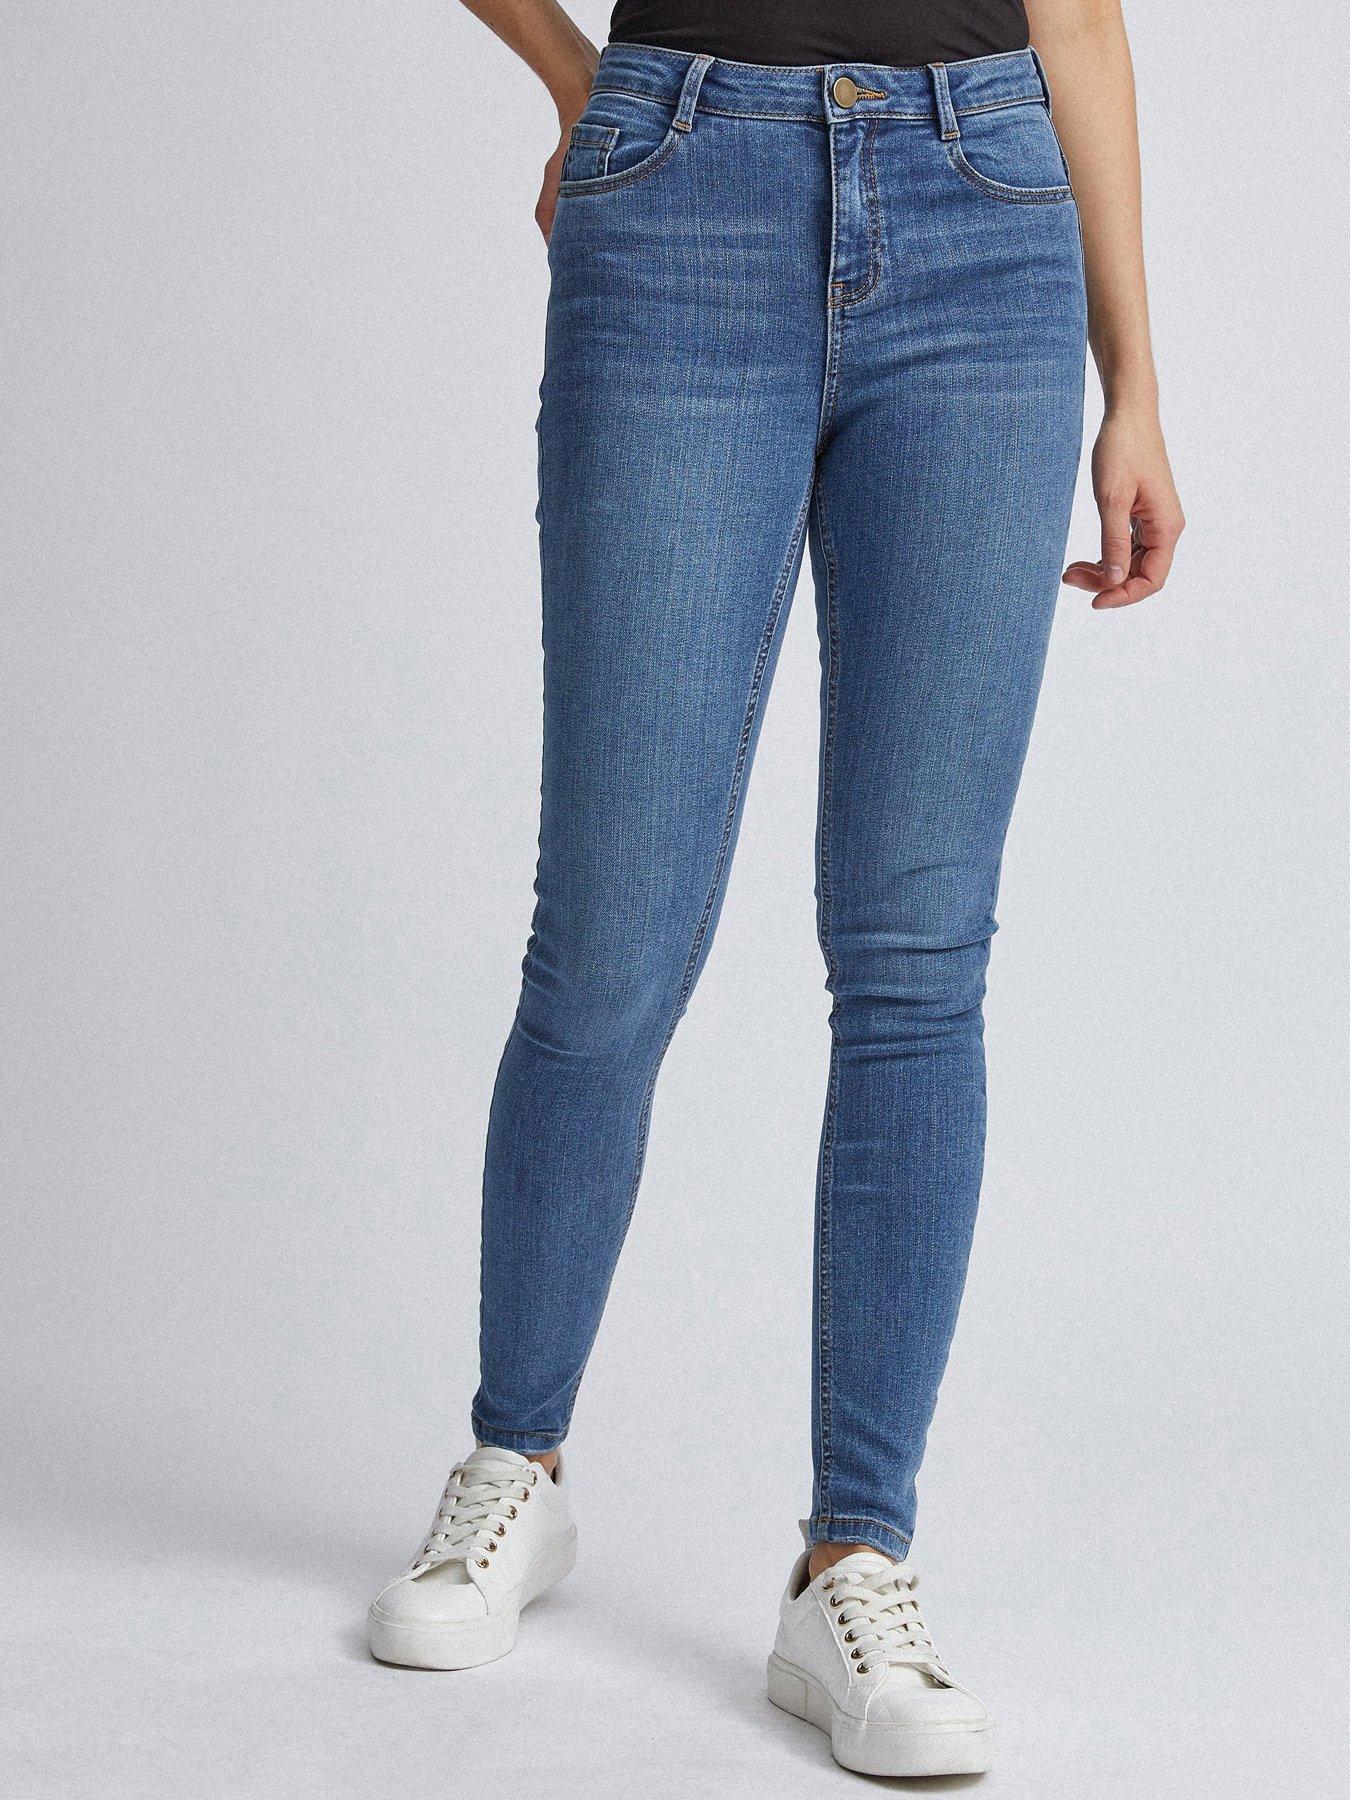 dorothy perkins skinny jeans